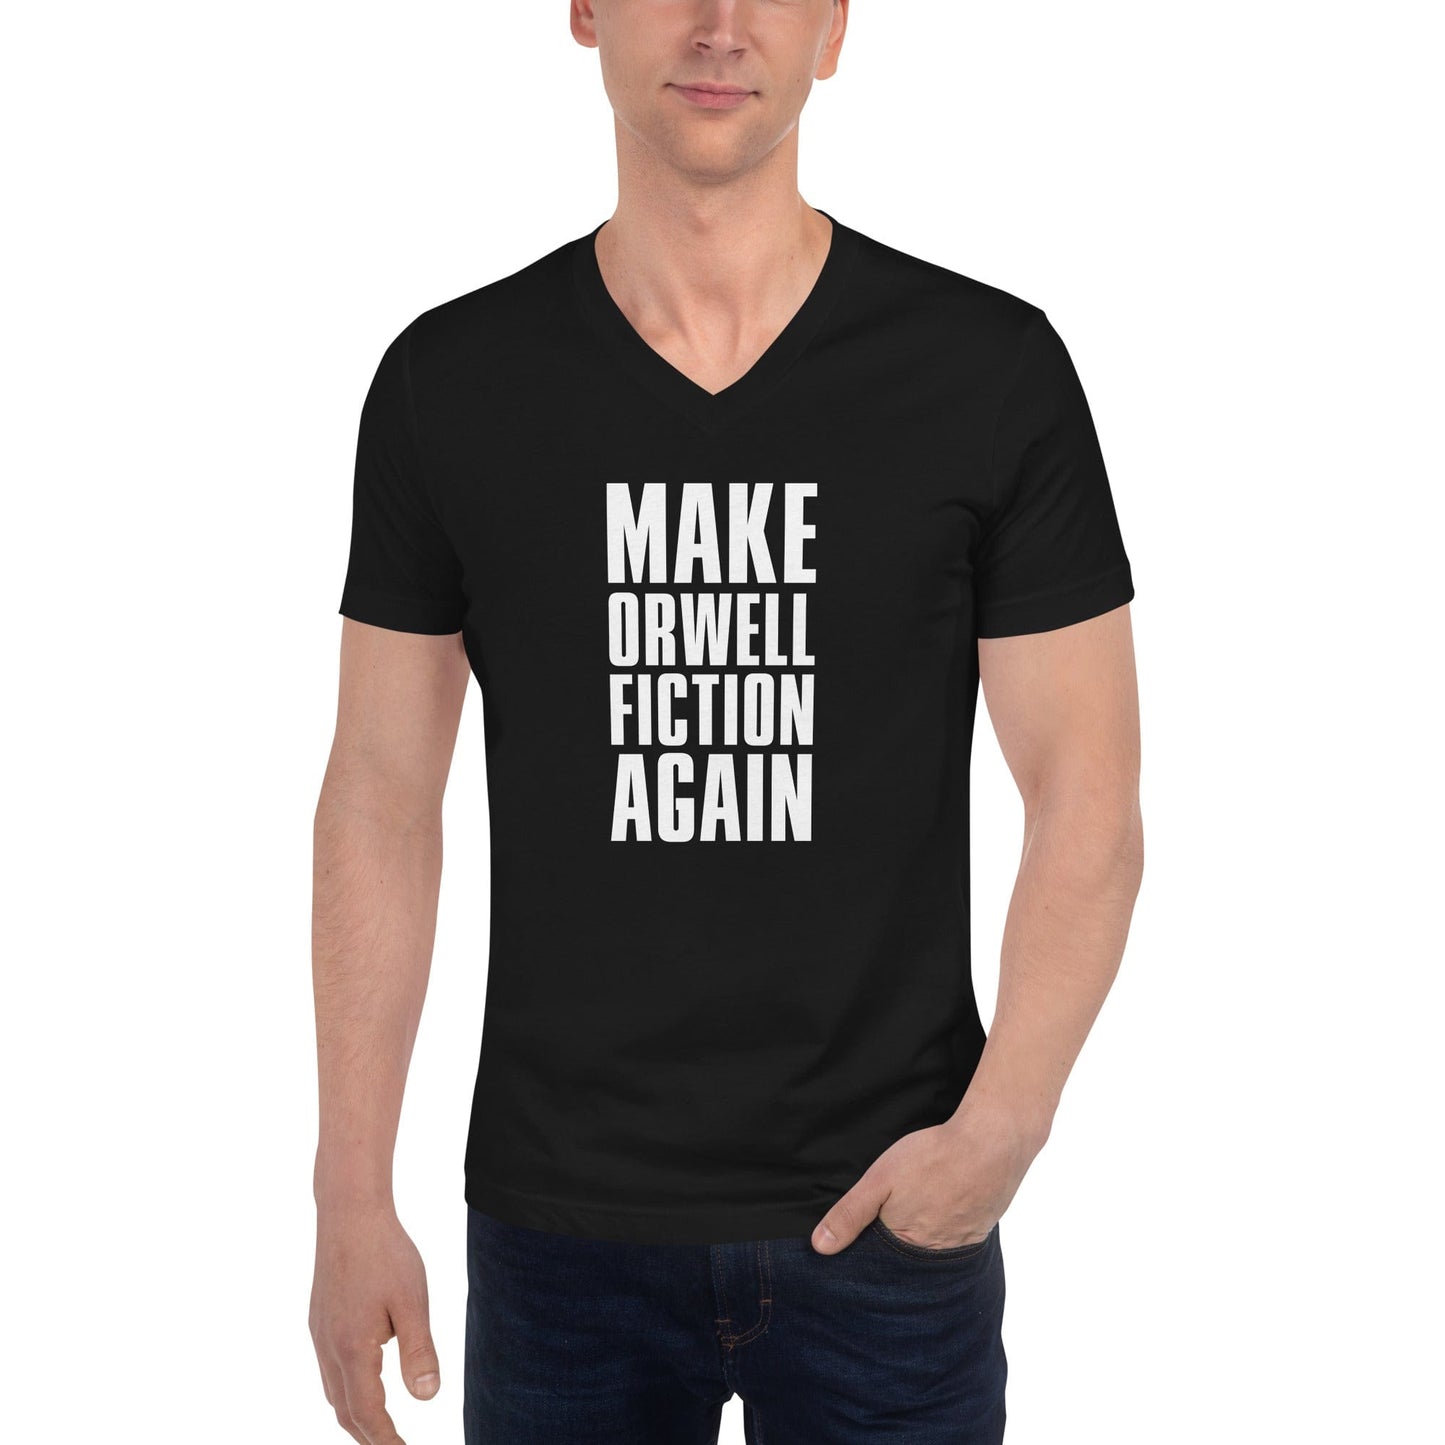 Make Orwell Fiction Again - Unisex V-Neck T-Shirt - Black / L - Discounted (US)